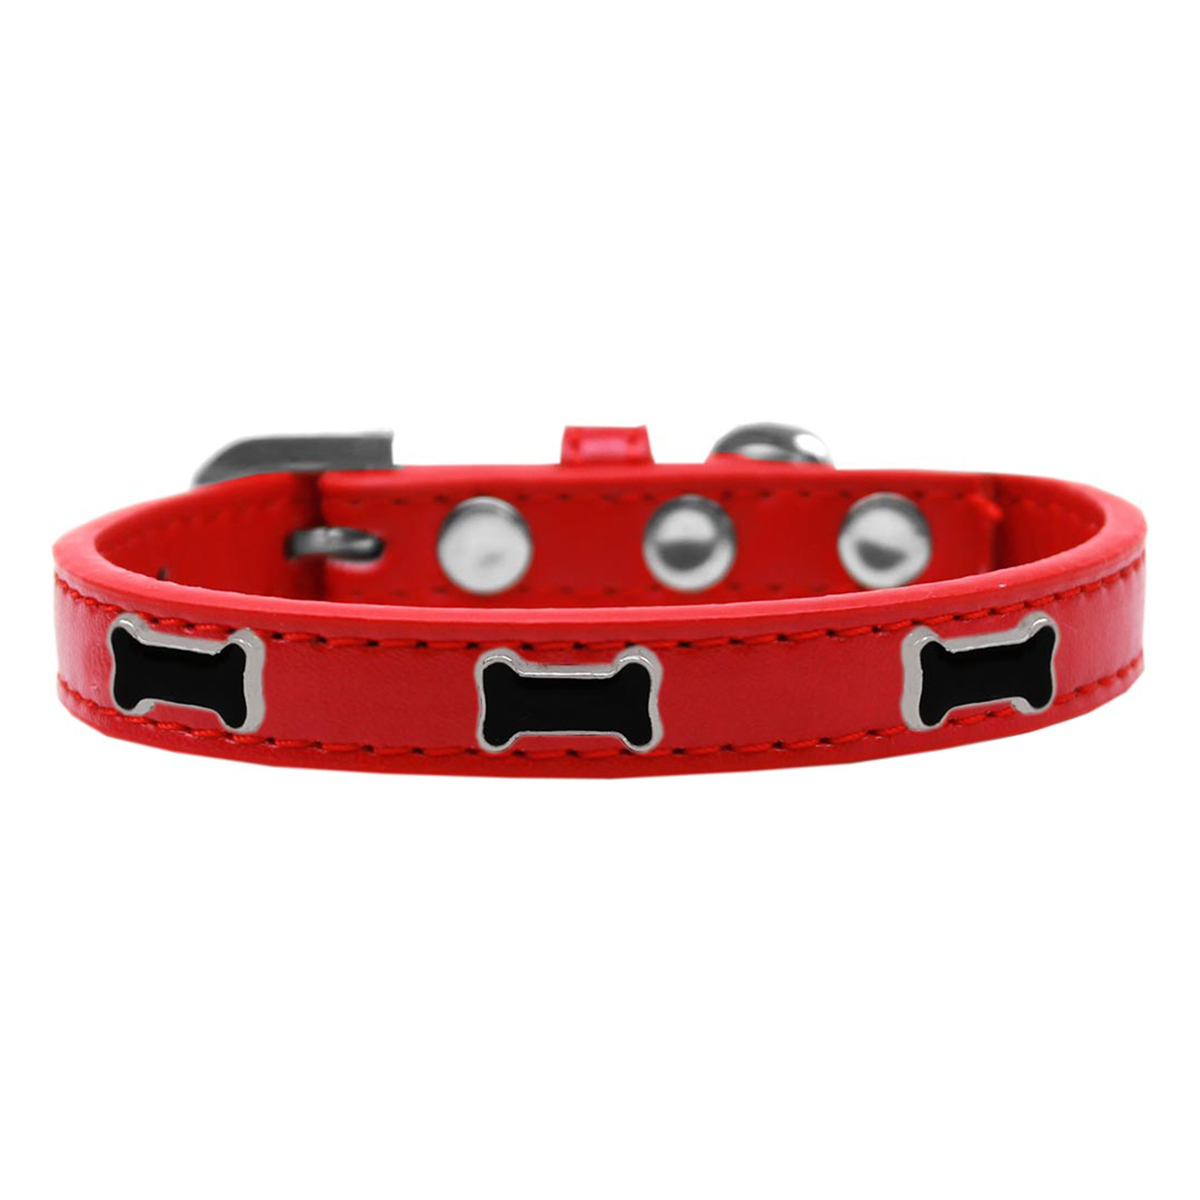 Black Bone Widget Dog Collar, Red - Size 14